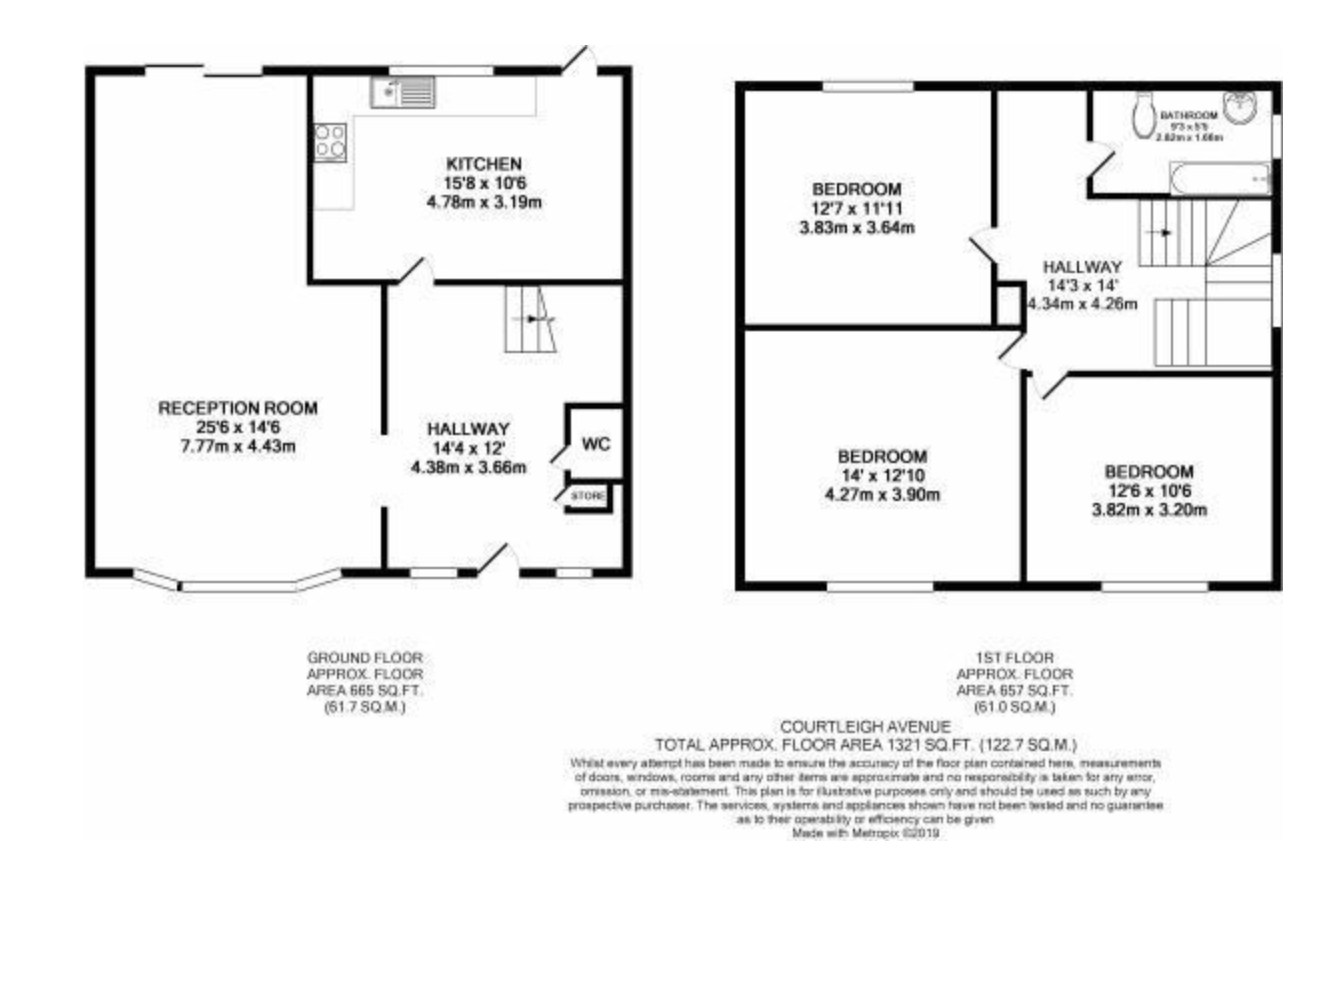 3 Bedrooms Detached house for sale in Courtleigh Avenue, Barnet EN4